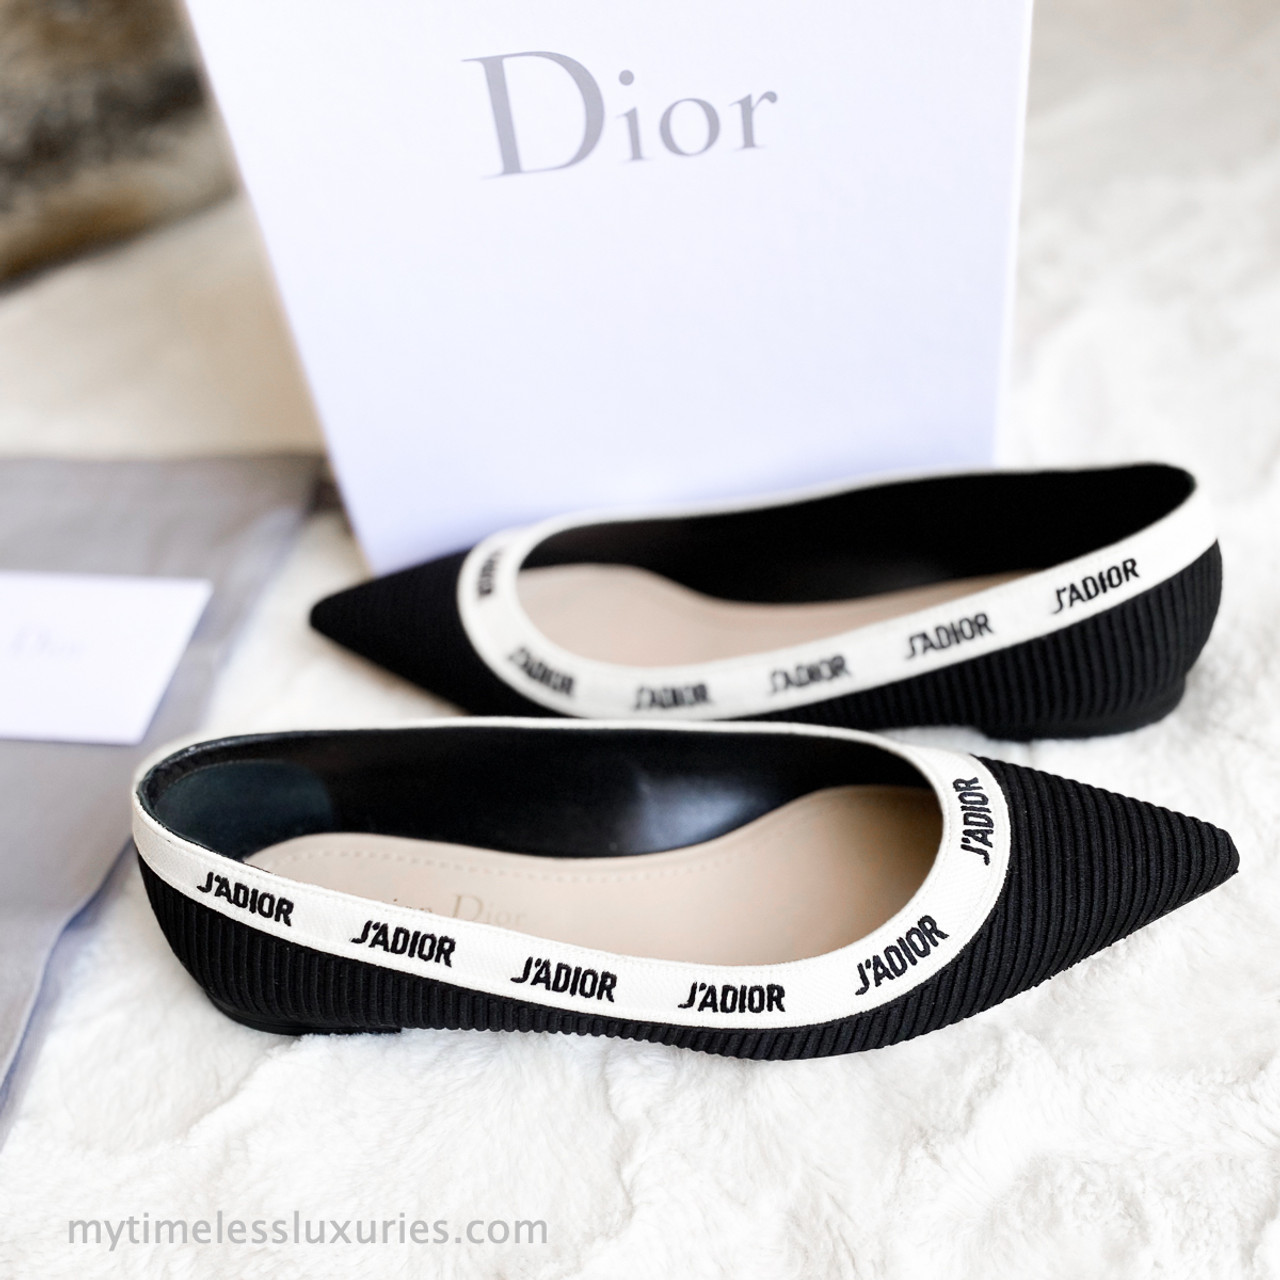 dior flat shoes 2019